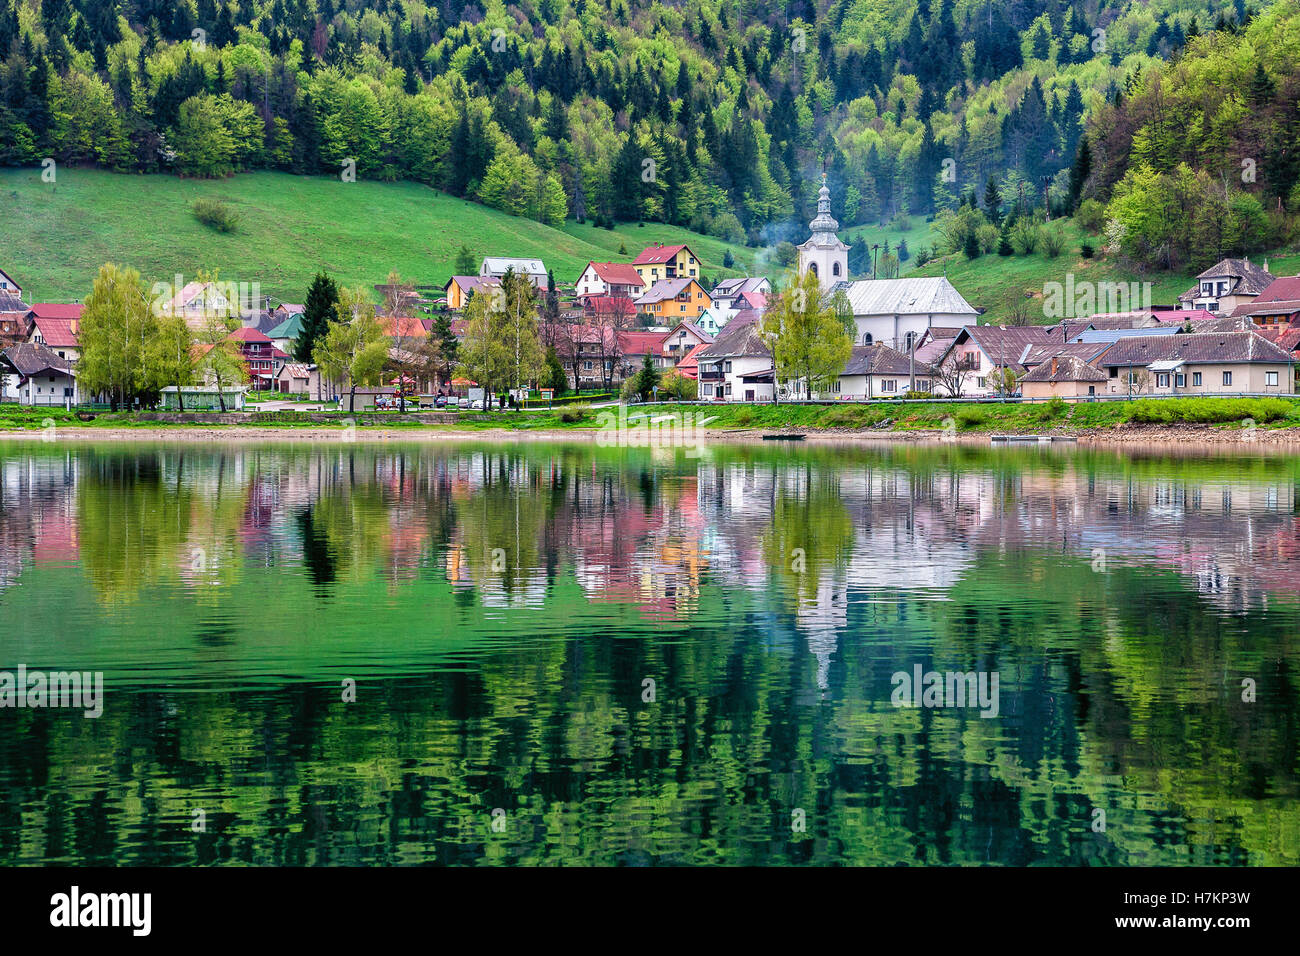 Village reflected in lake - Dedinky, Slovakia Stock Photo